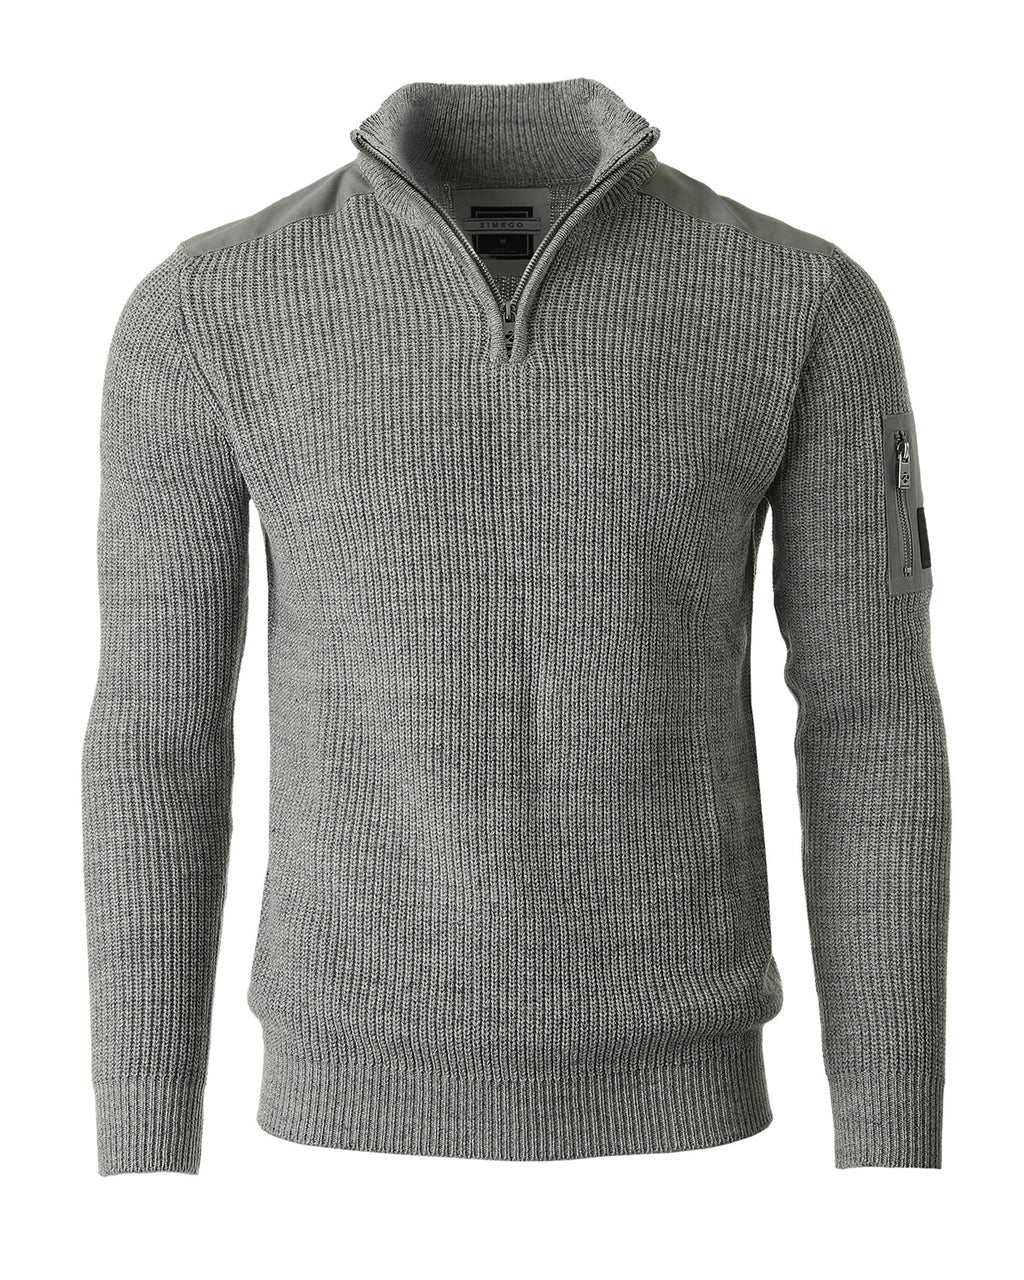 ZIMEGO Mens Long Sleeve Pullover Quarter Zip Mock Neck Polo Sweater